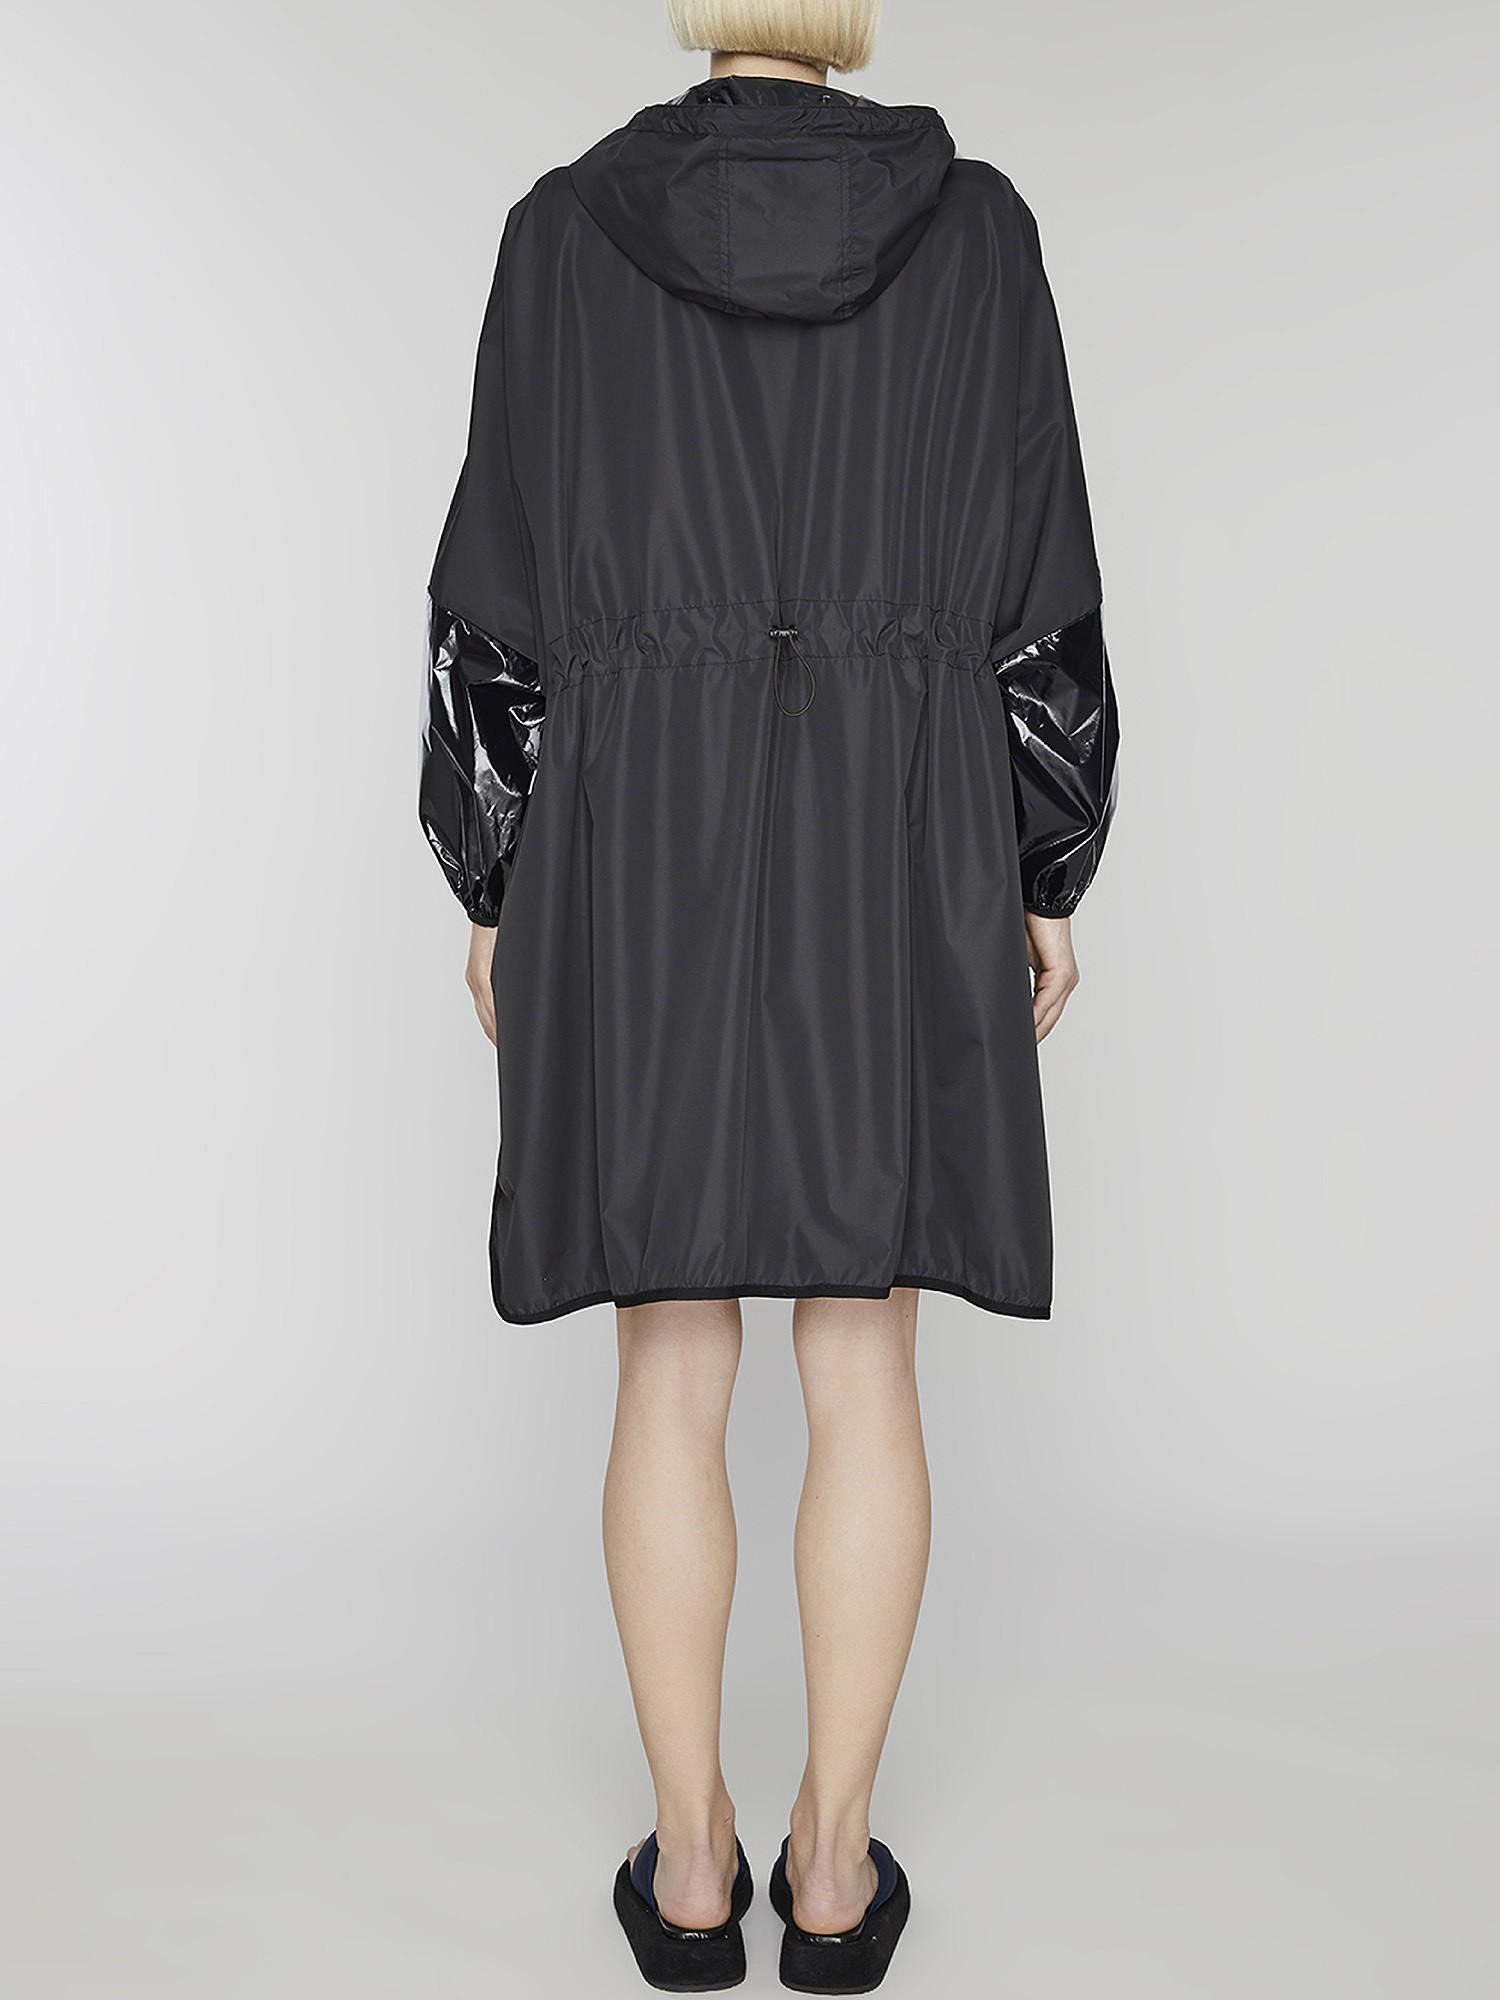 Oof Wear - Hooded cape, Black, large image number 2